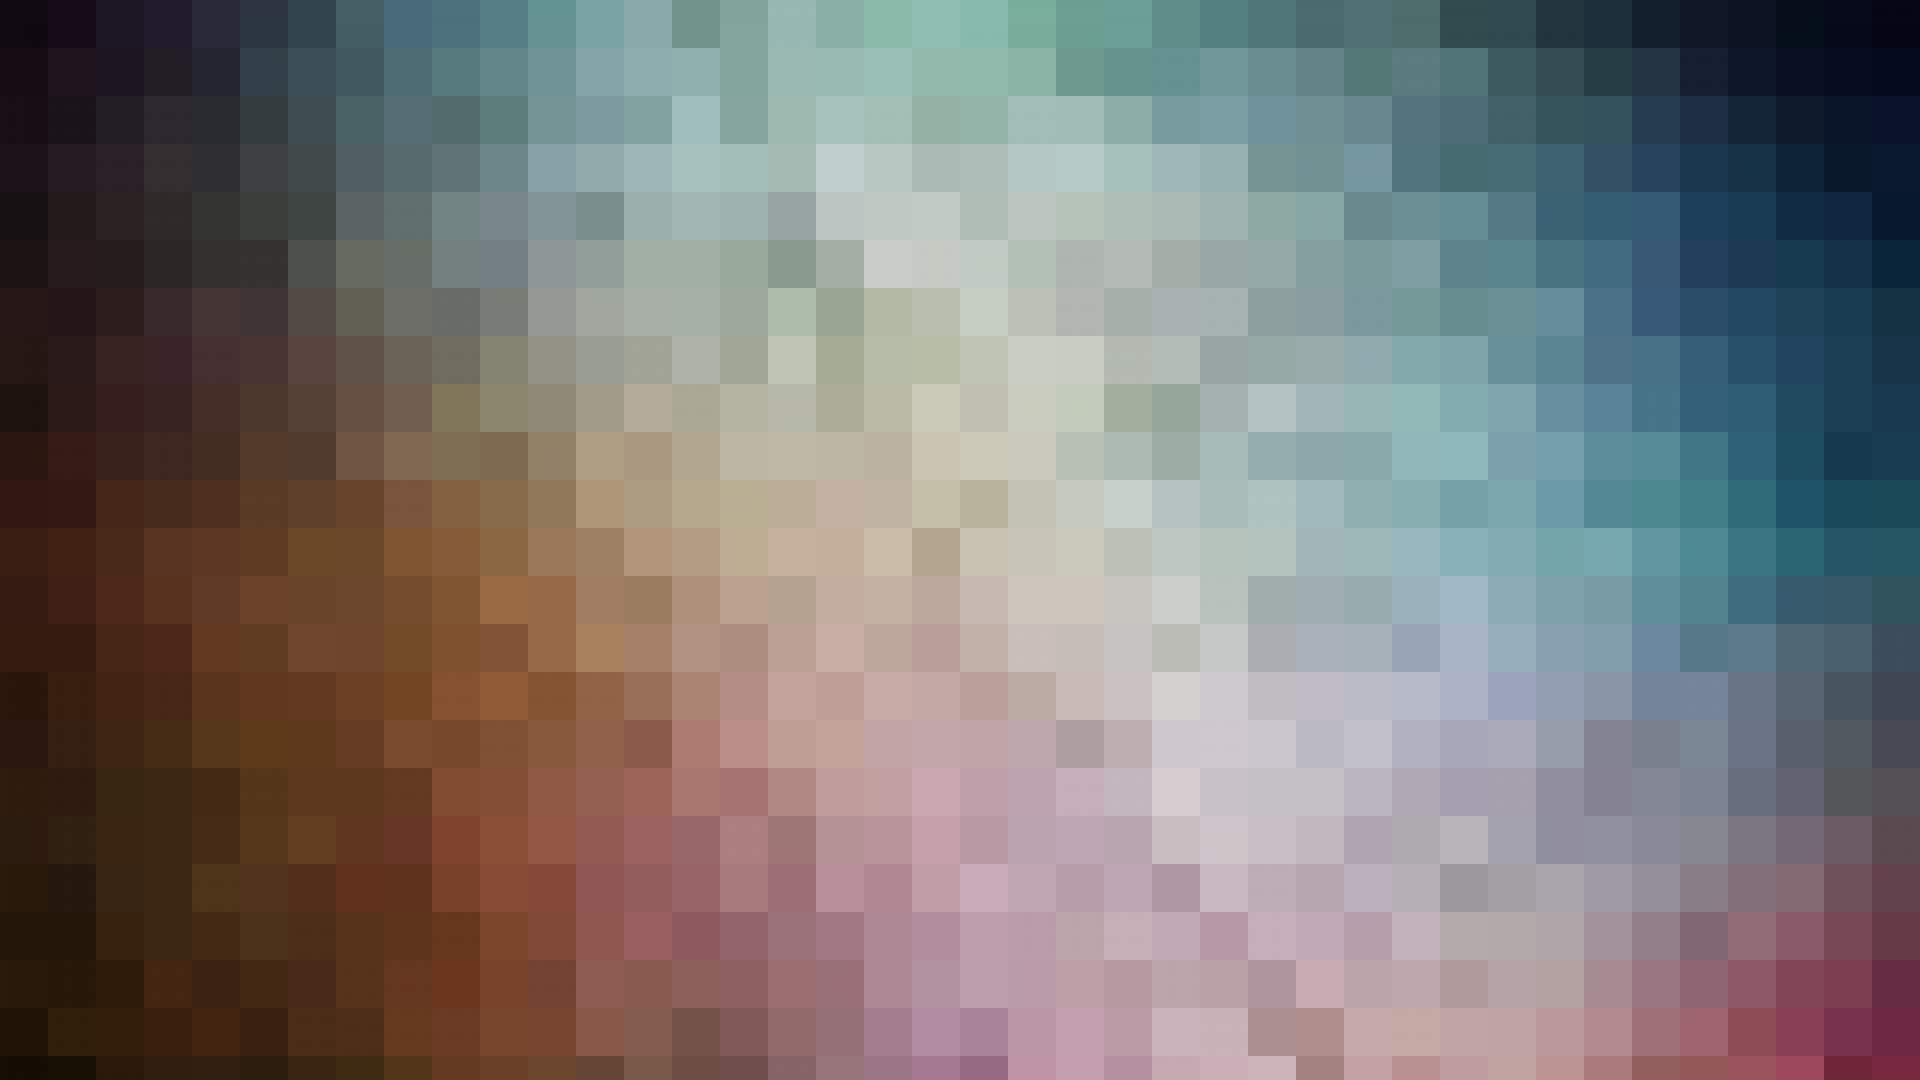 Download Pixel Forest Wallpaper 8218 1920x1200 px High Resolution ...